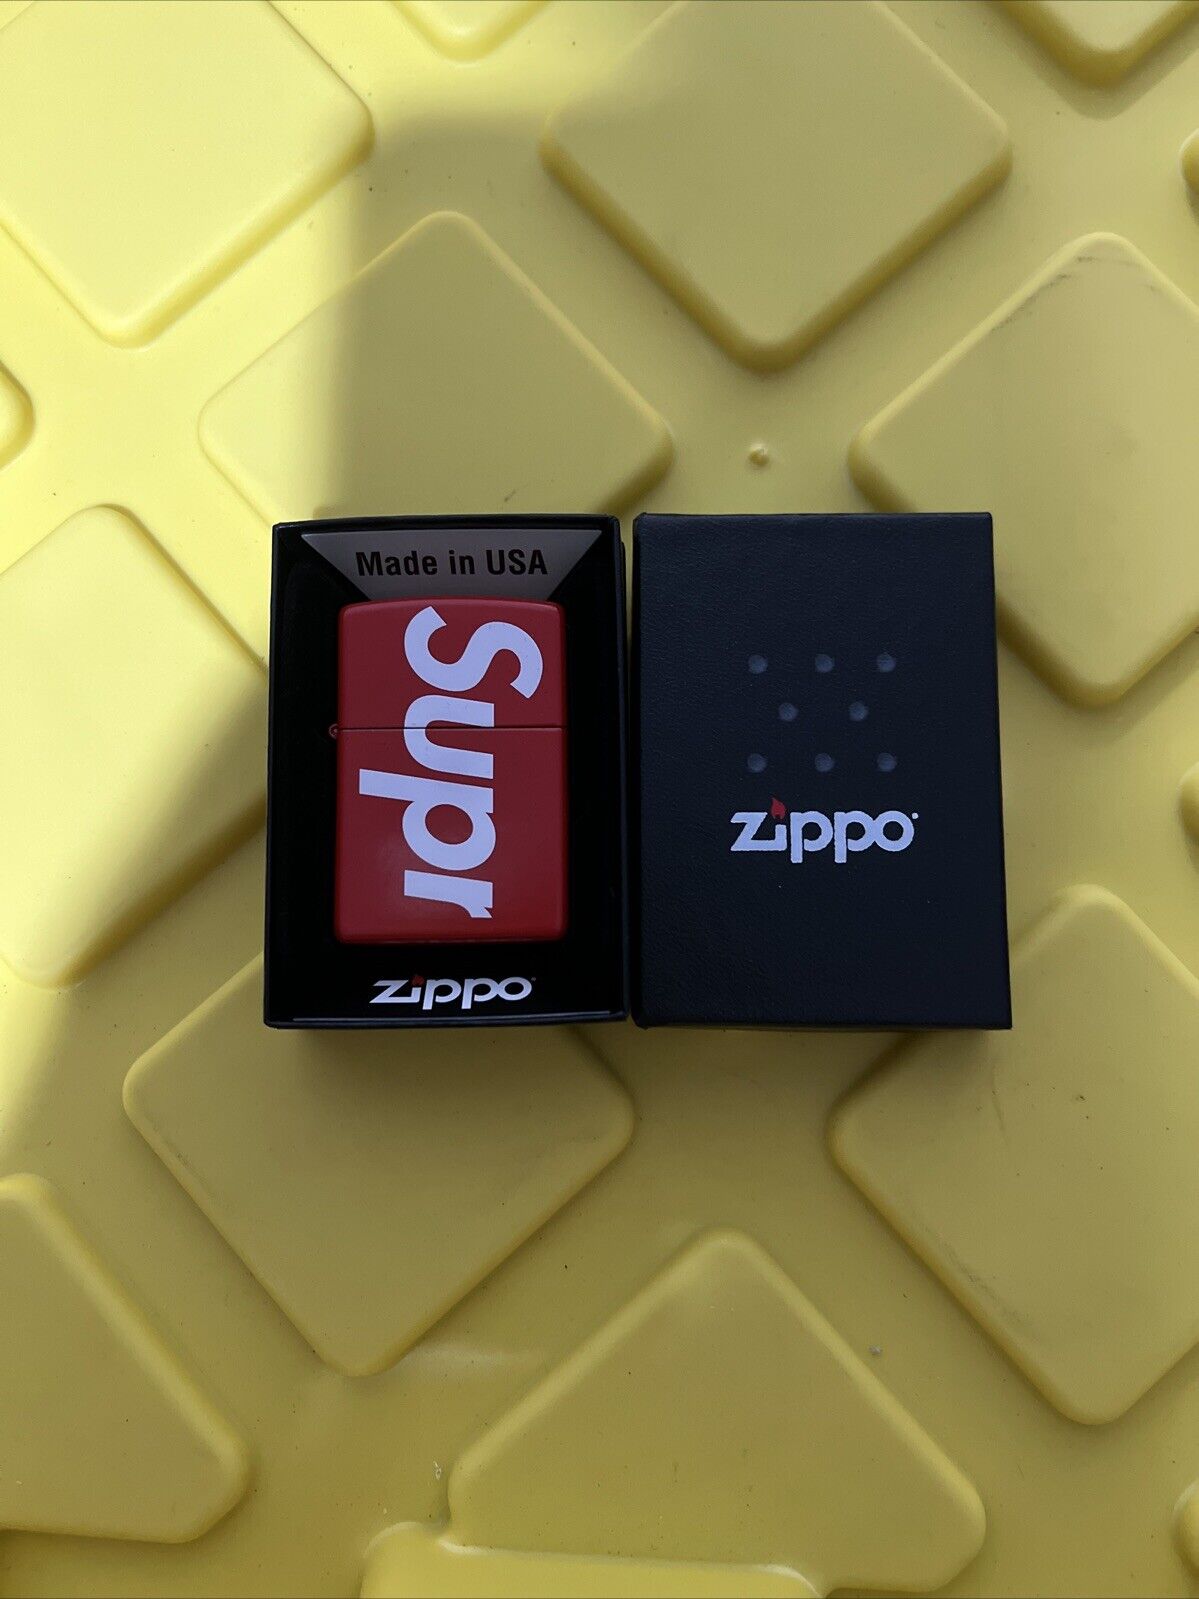 NOS Red Zippo Lighter Supreme New York Clothing Skateboard Shop Logo Sold Out